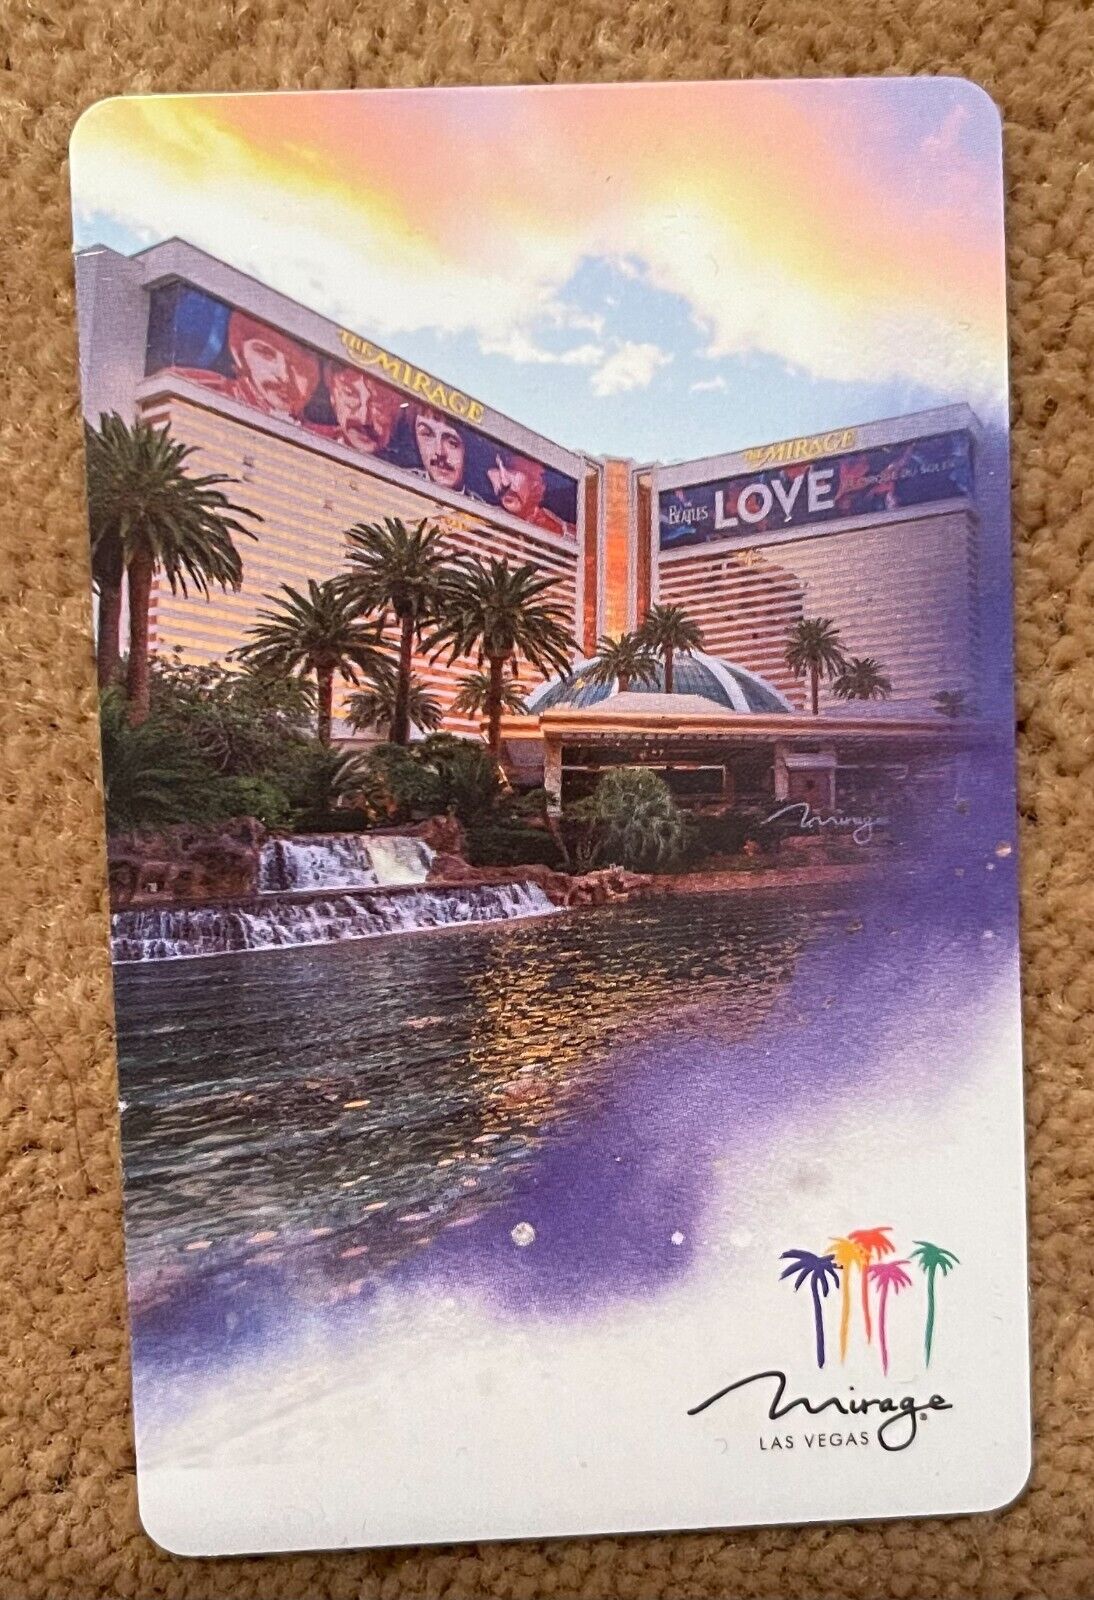 The Mirage Las Vegas Hotel & Casino Collectible Room Key